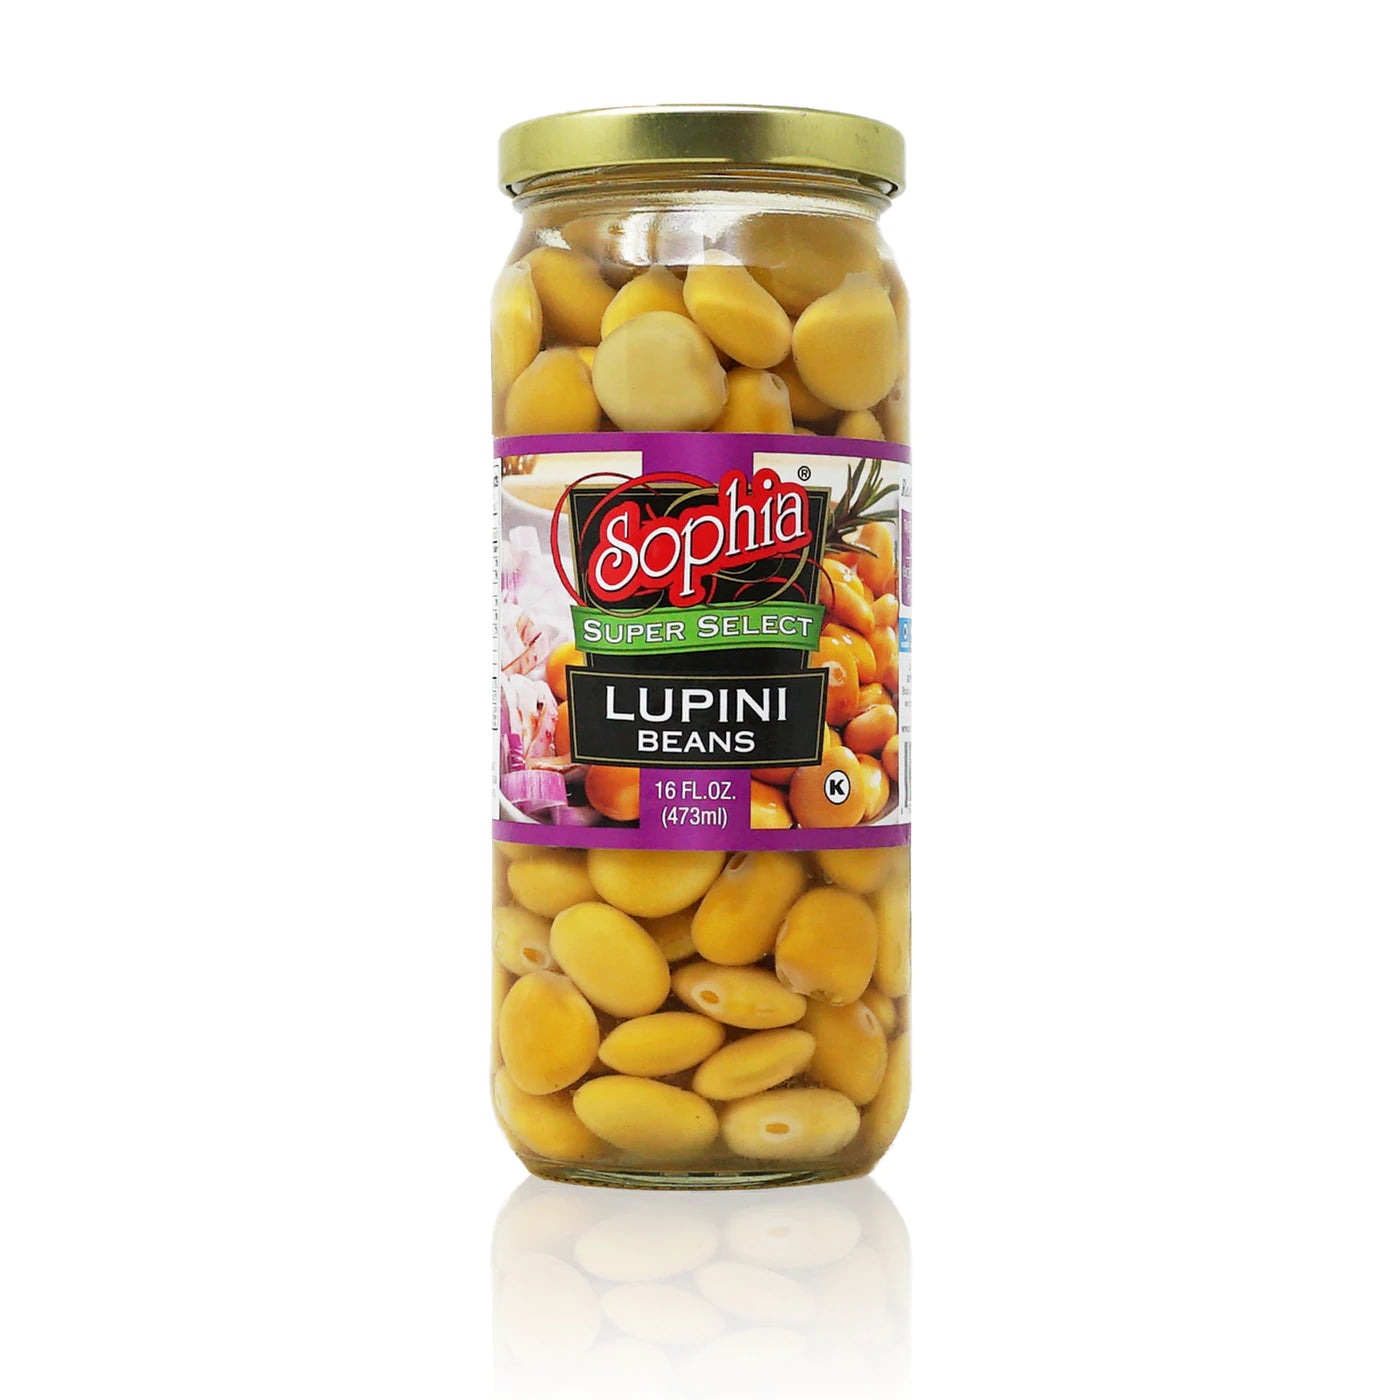 Sophia Lupini Beans 16 oz